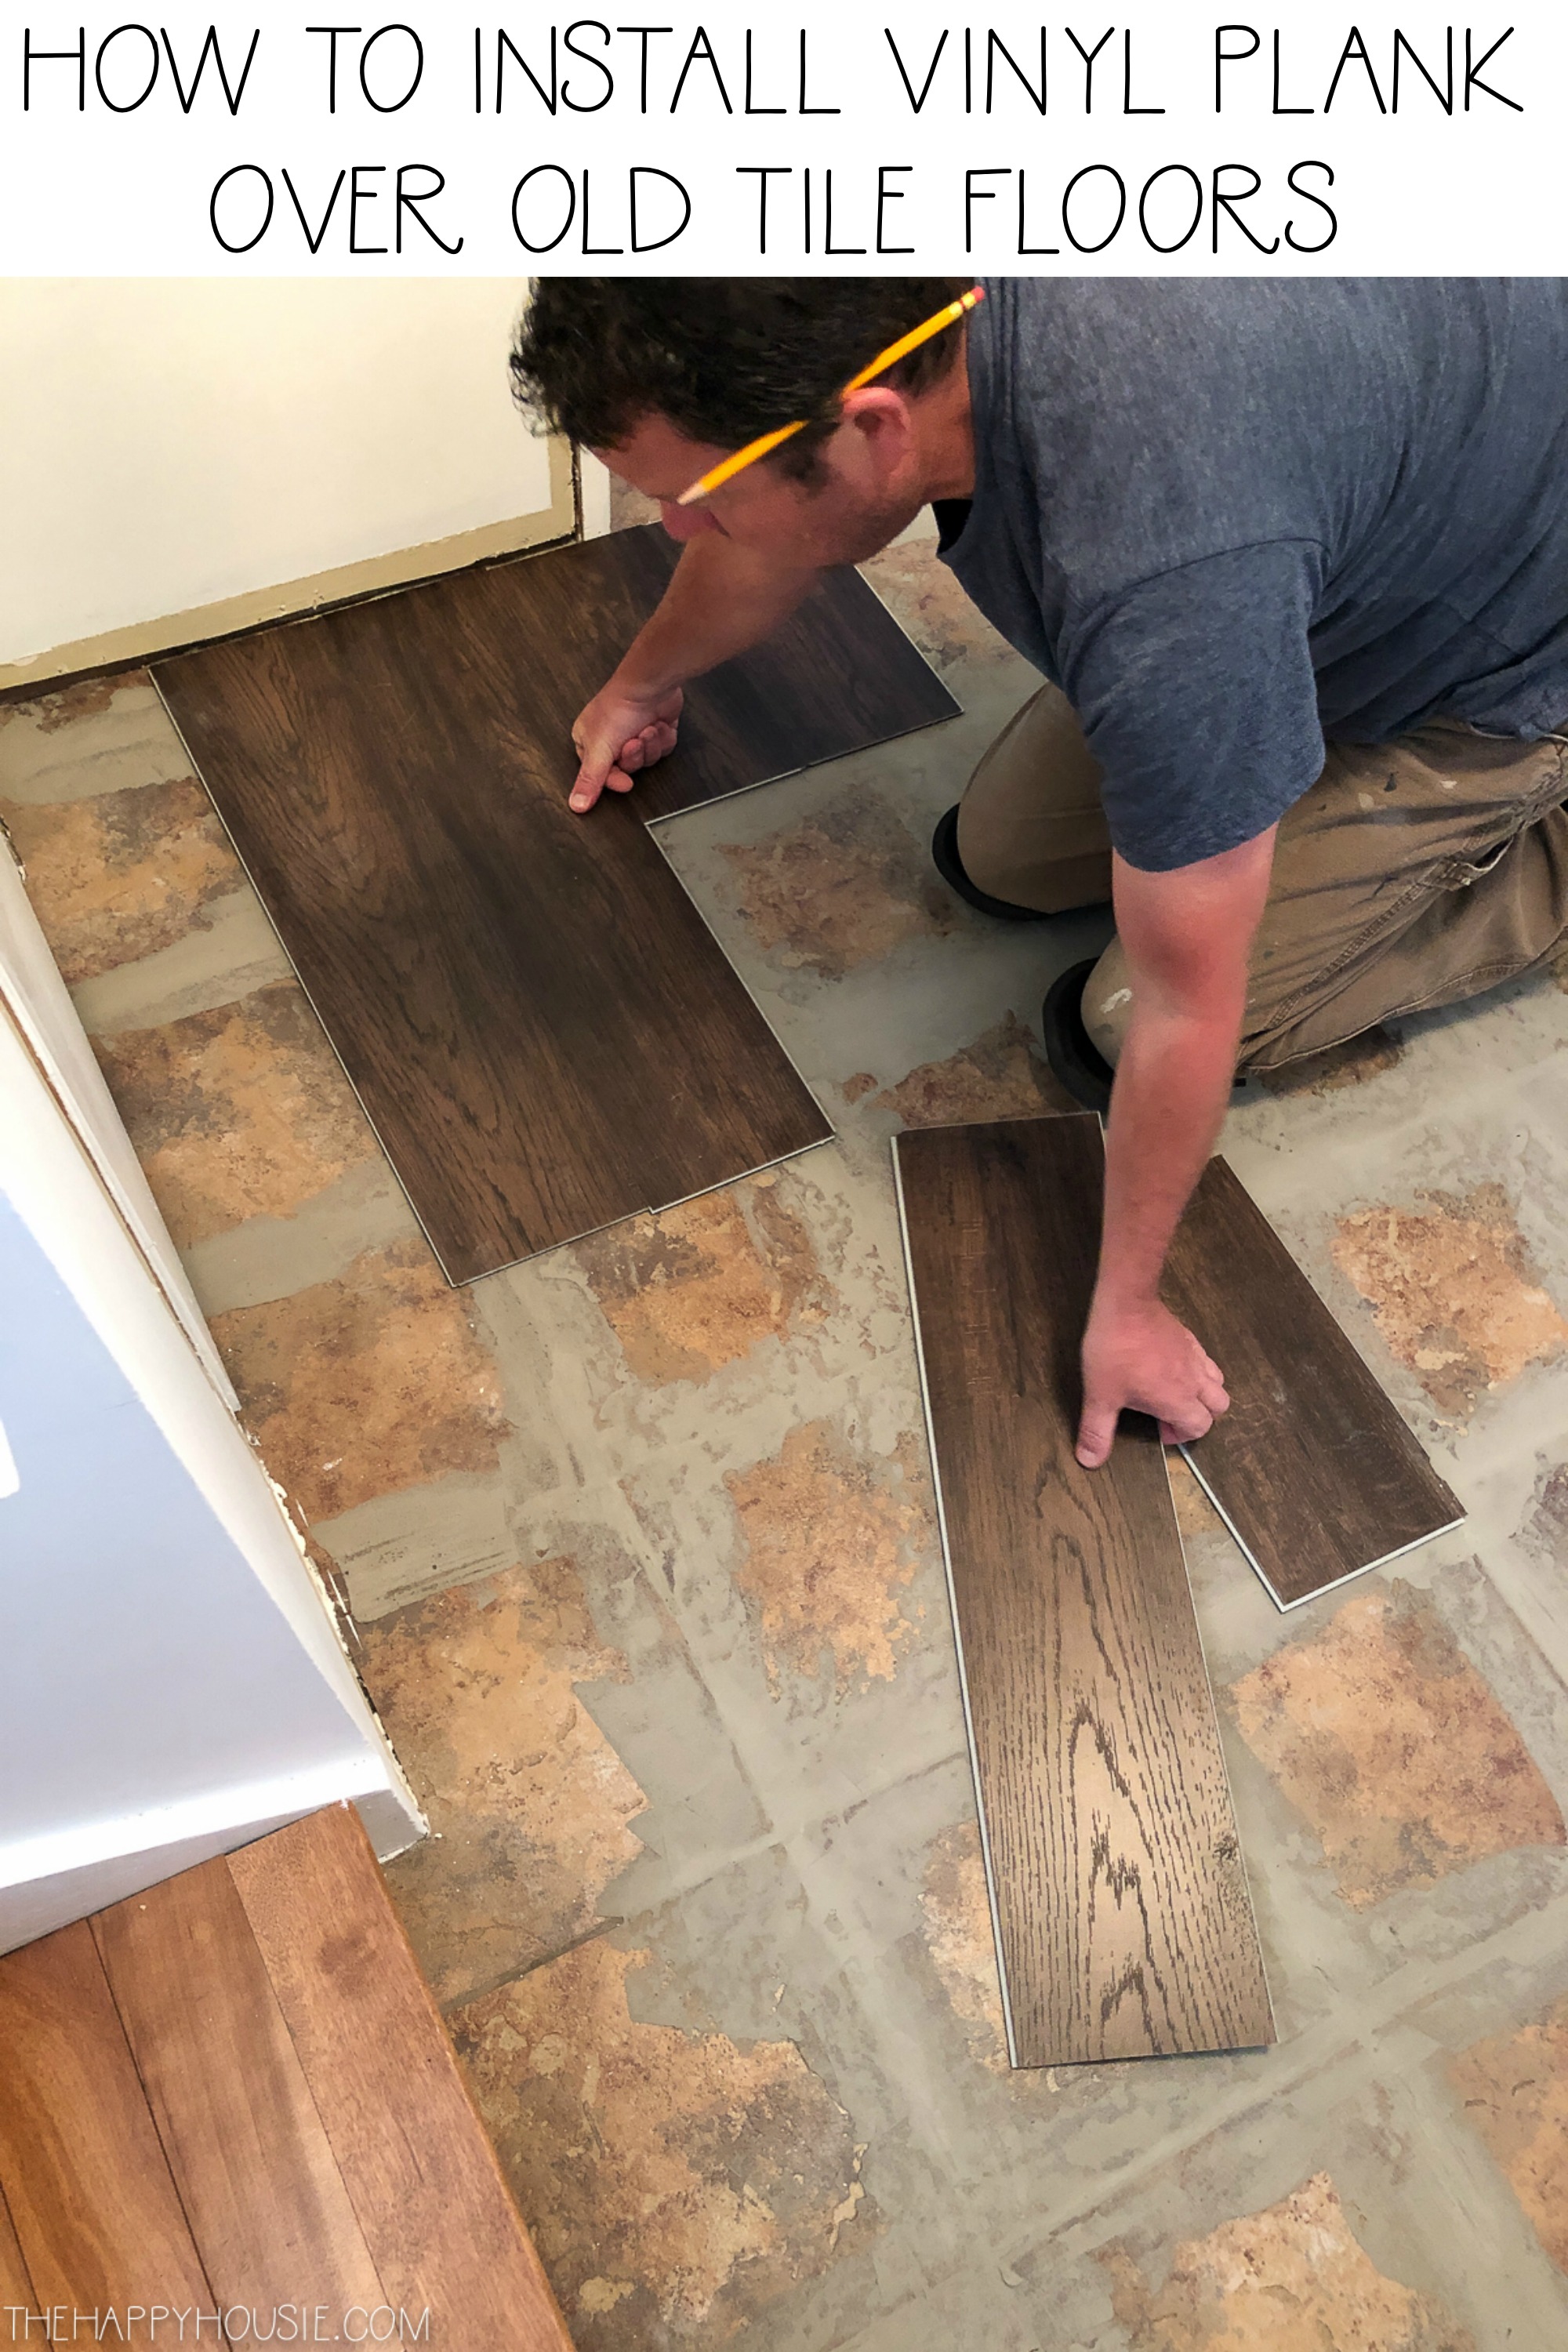 Install Vinyl Plank Over Tile Floors, How To Lay Laminate Flooring Over Ceramic Tile